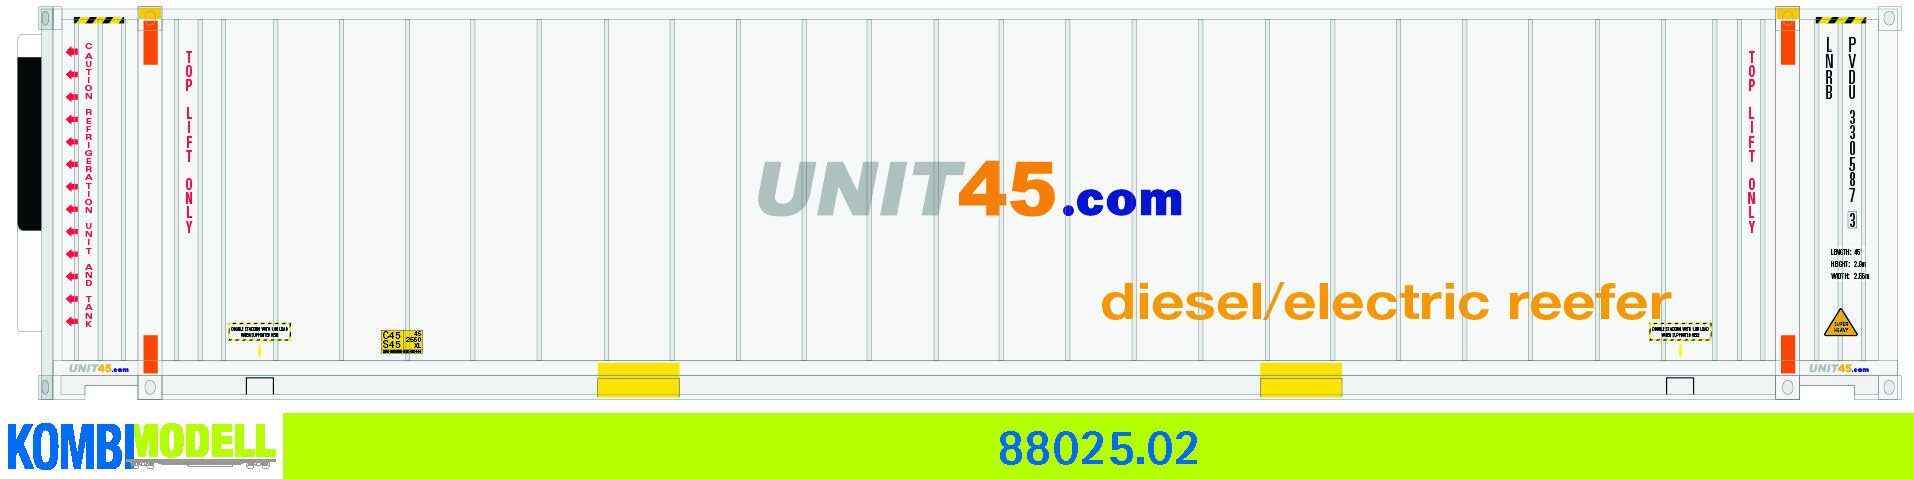 Kombimodell 88025.02 WB-A /Ct 45' (Euro) Reefer (DE) Unit45"" #PVDU 330587